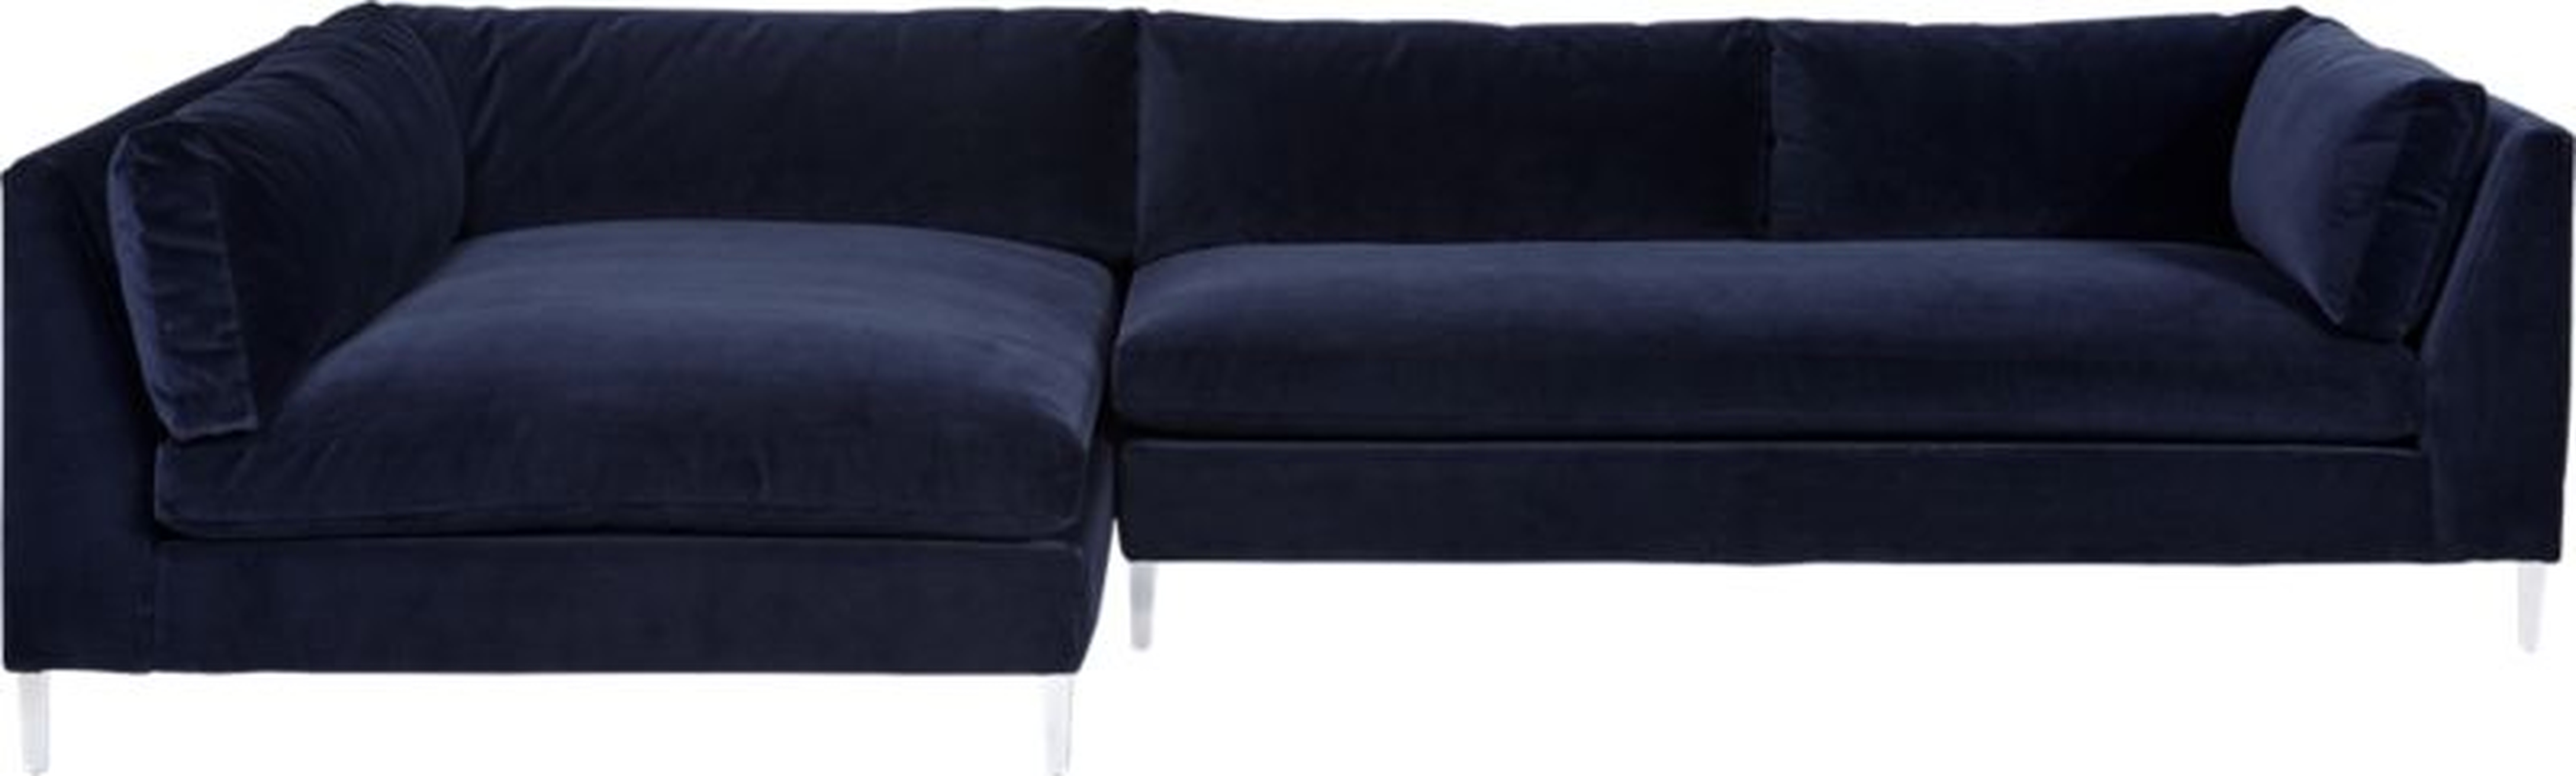 Decker 2-Piece Blue Velvet Sectional Sofa - CB2